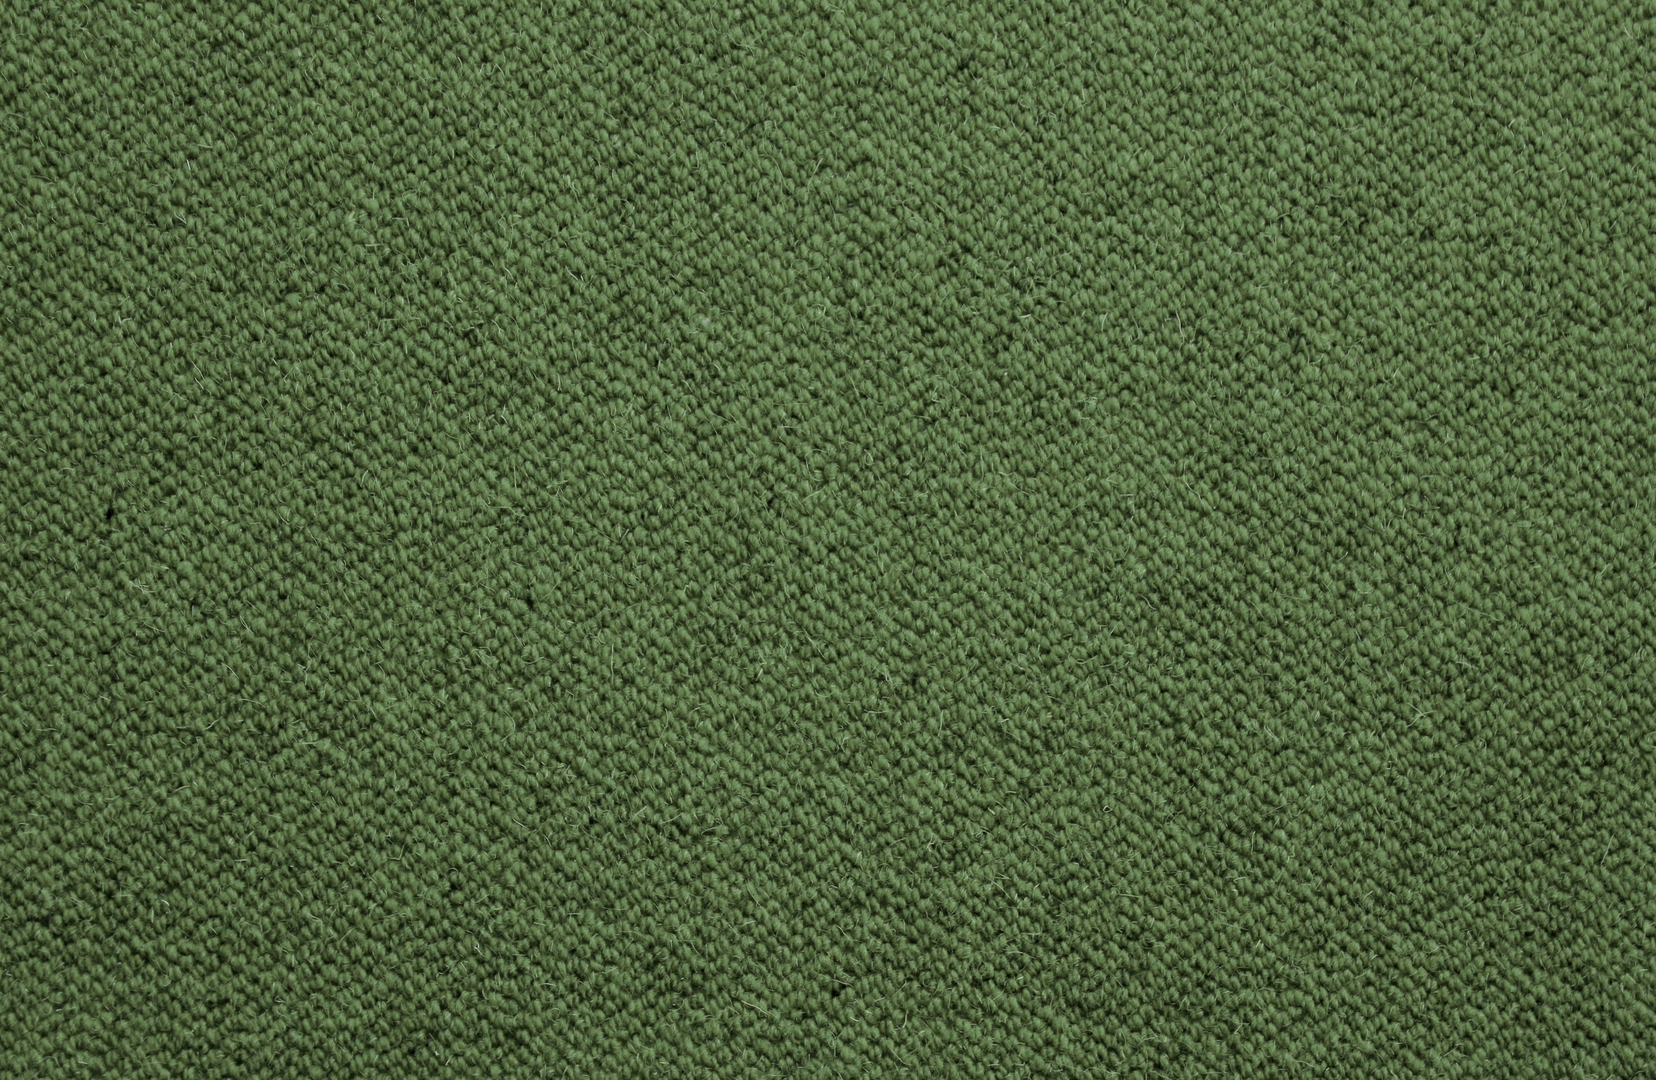 Antares Naturboden Grün Bild 2